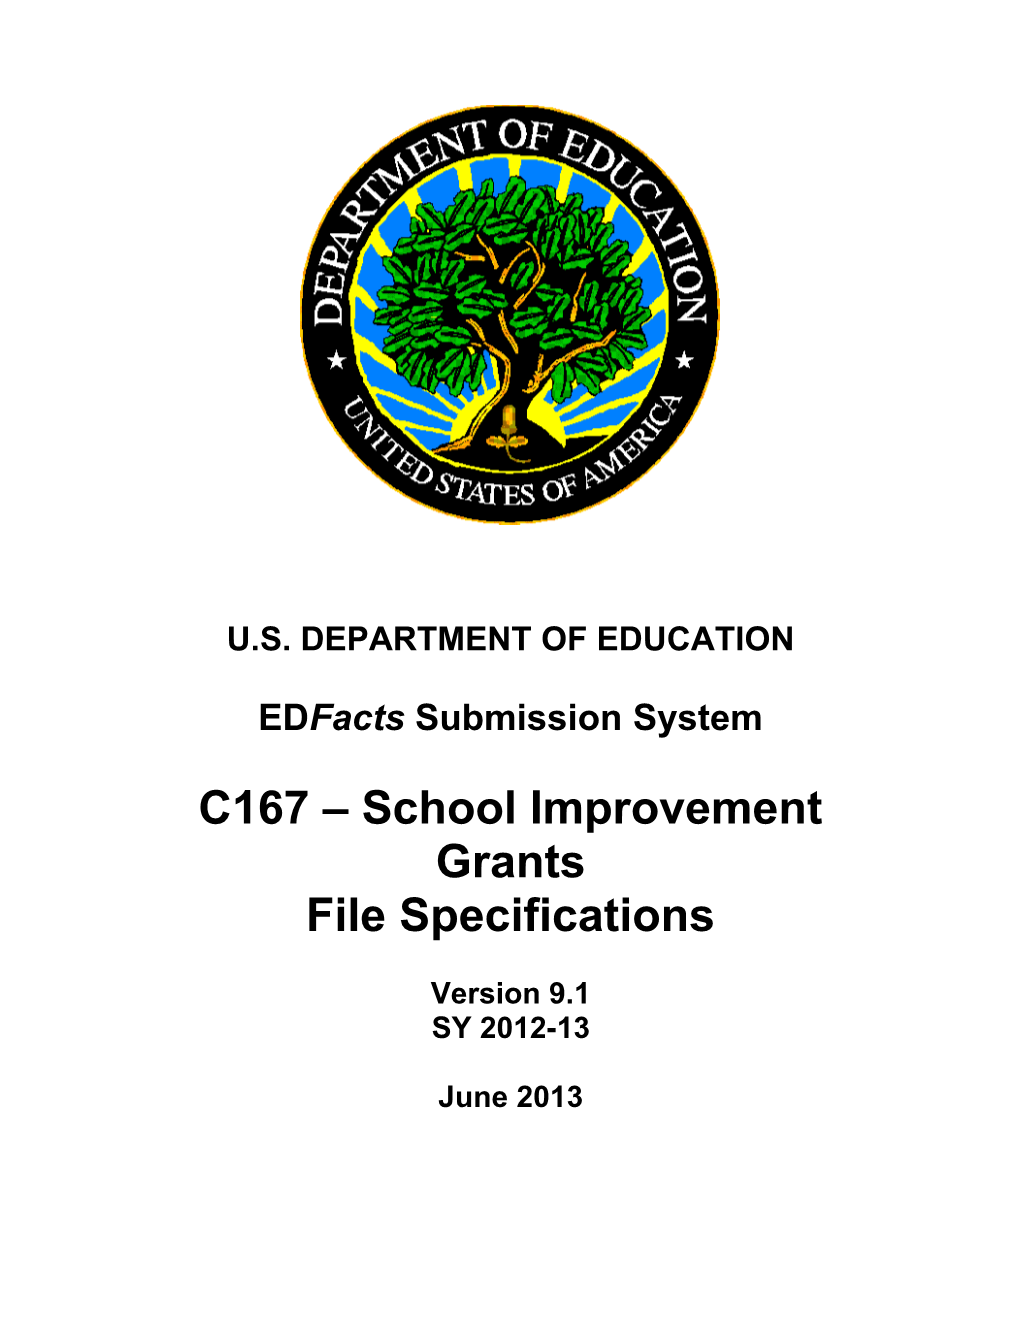 School Improvement Grants File Specifications